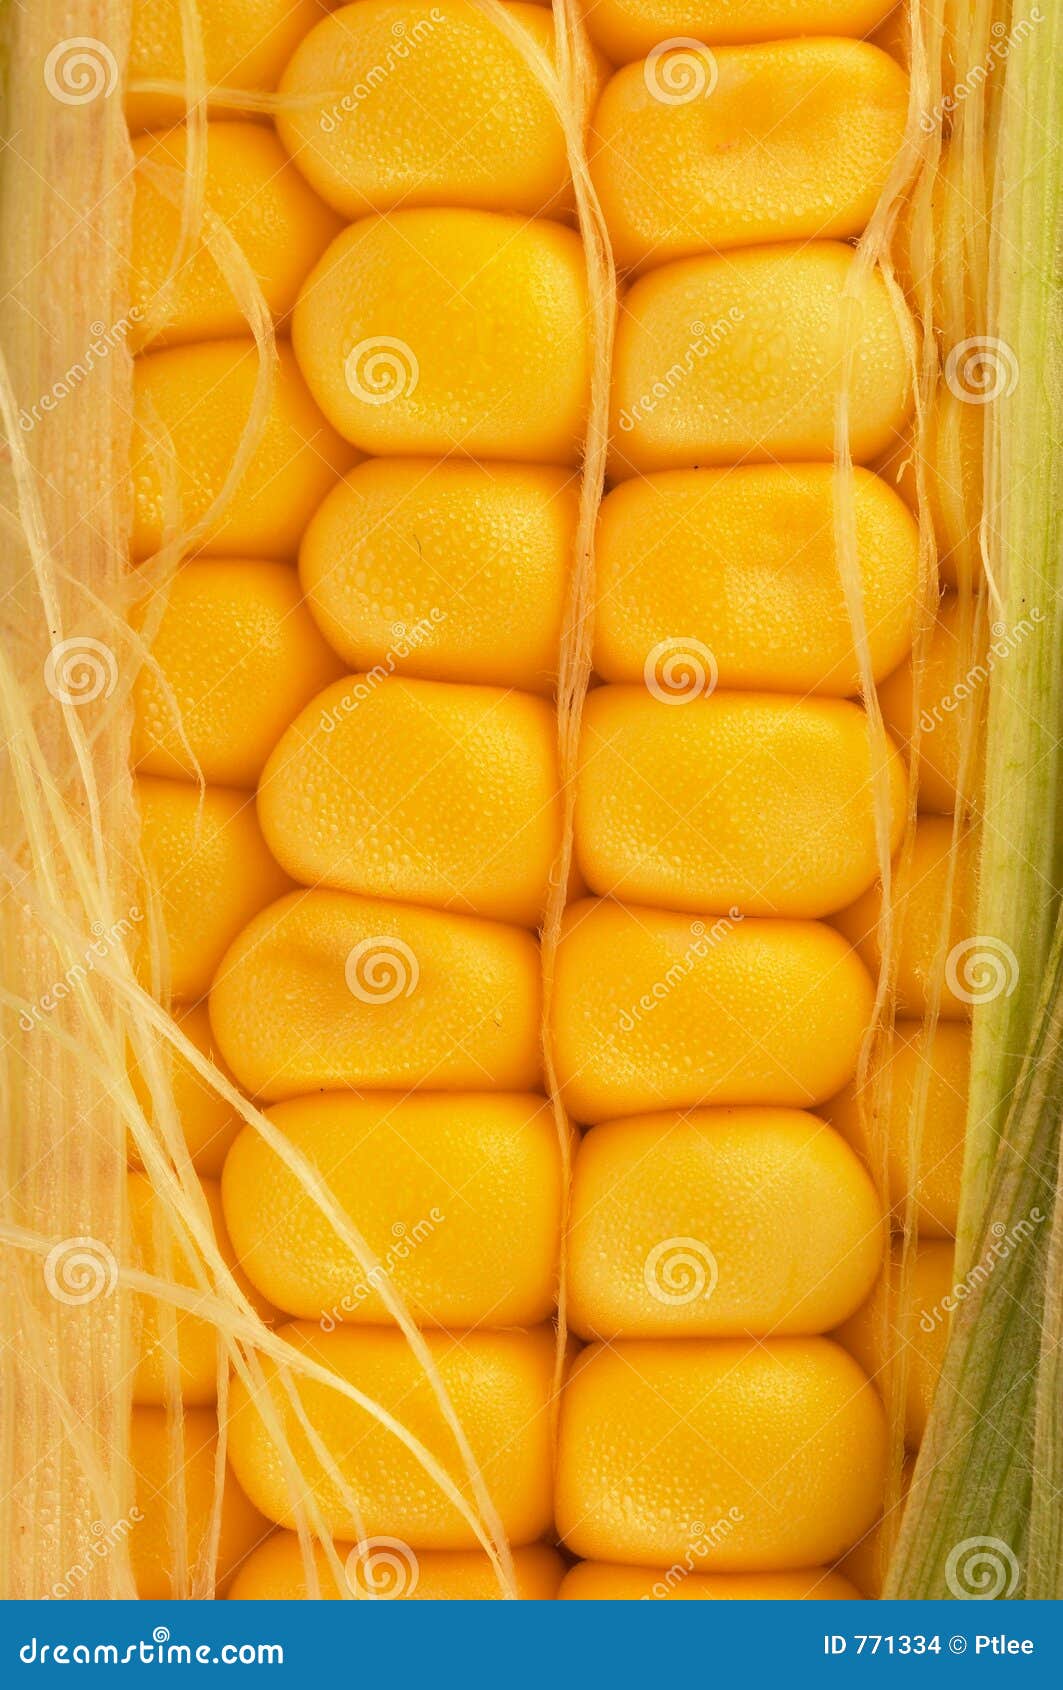 corn on cob closeup